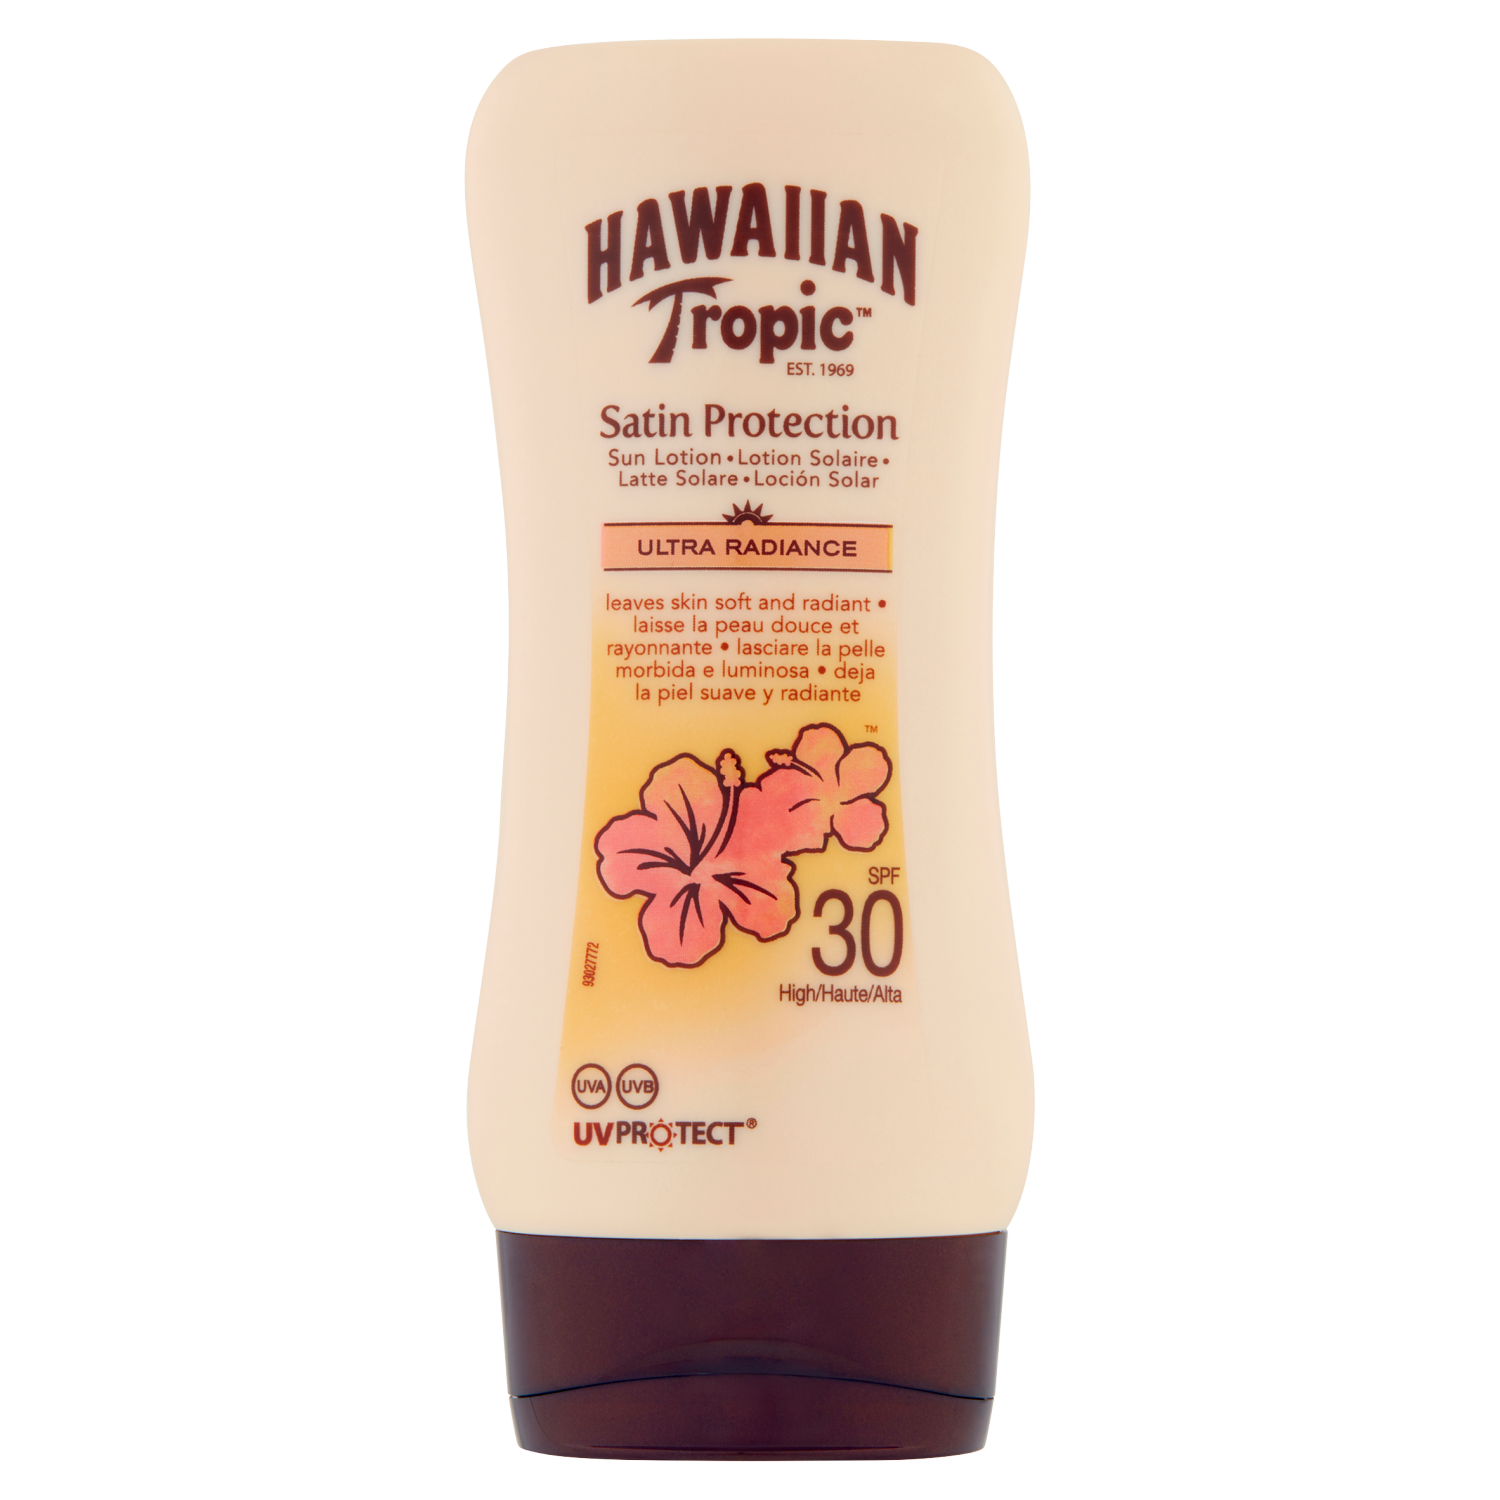 Hawaiian Tropic Satin Protection